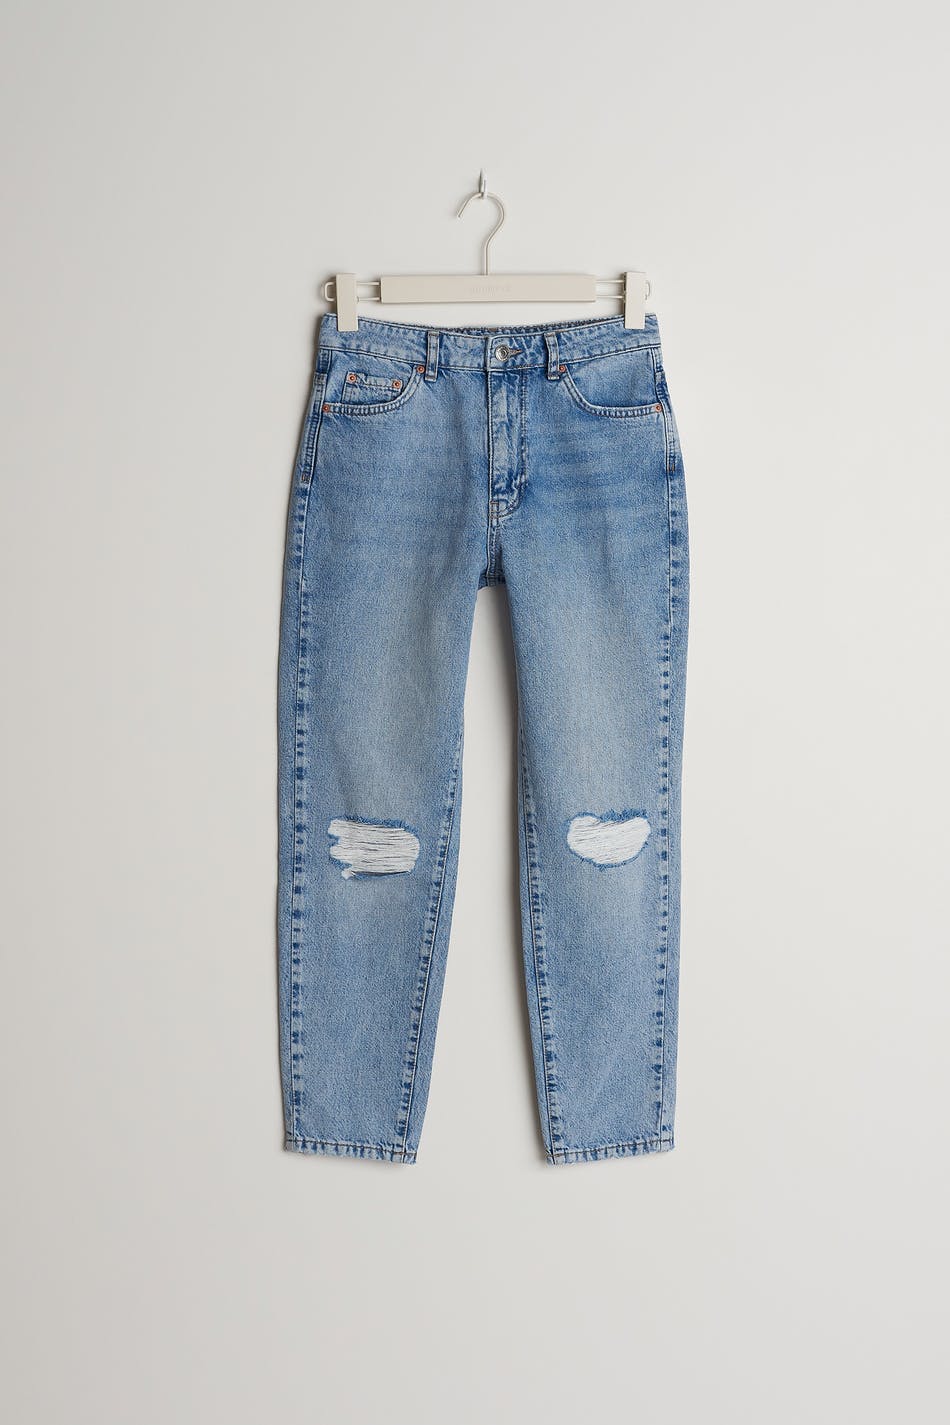 Gina Tricot Dagny PETITE jeans 34  Sea blue dest (5114)